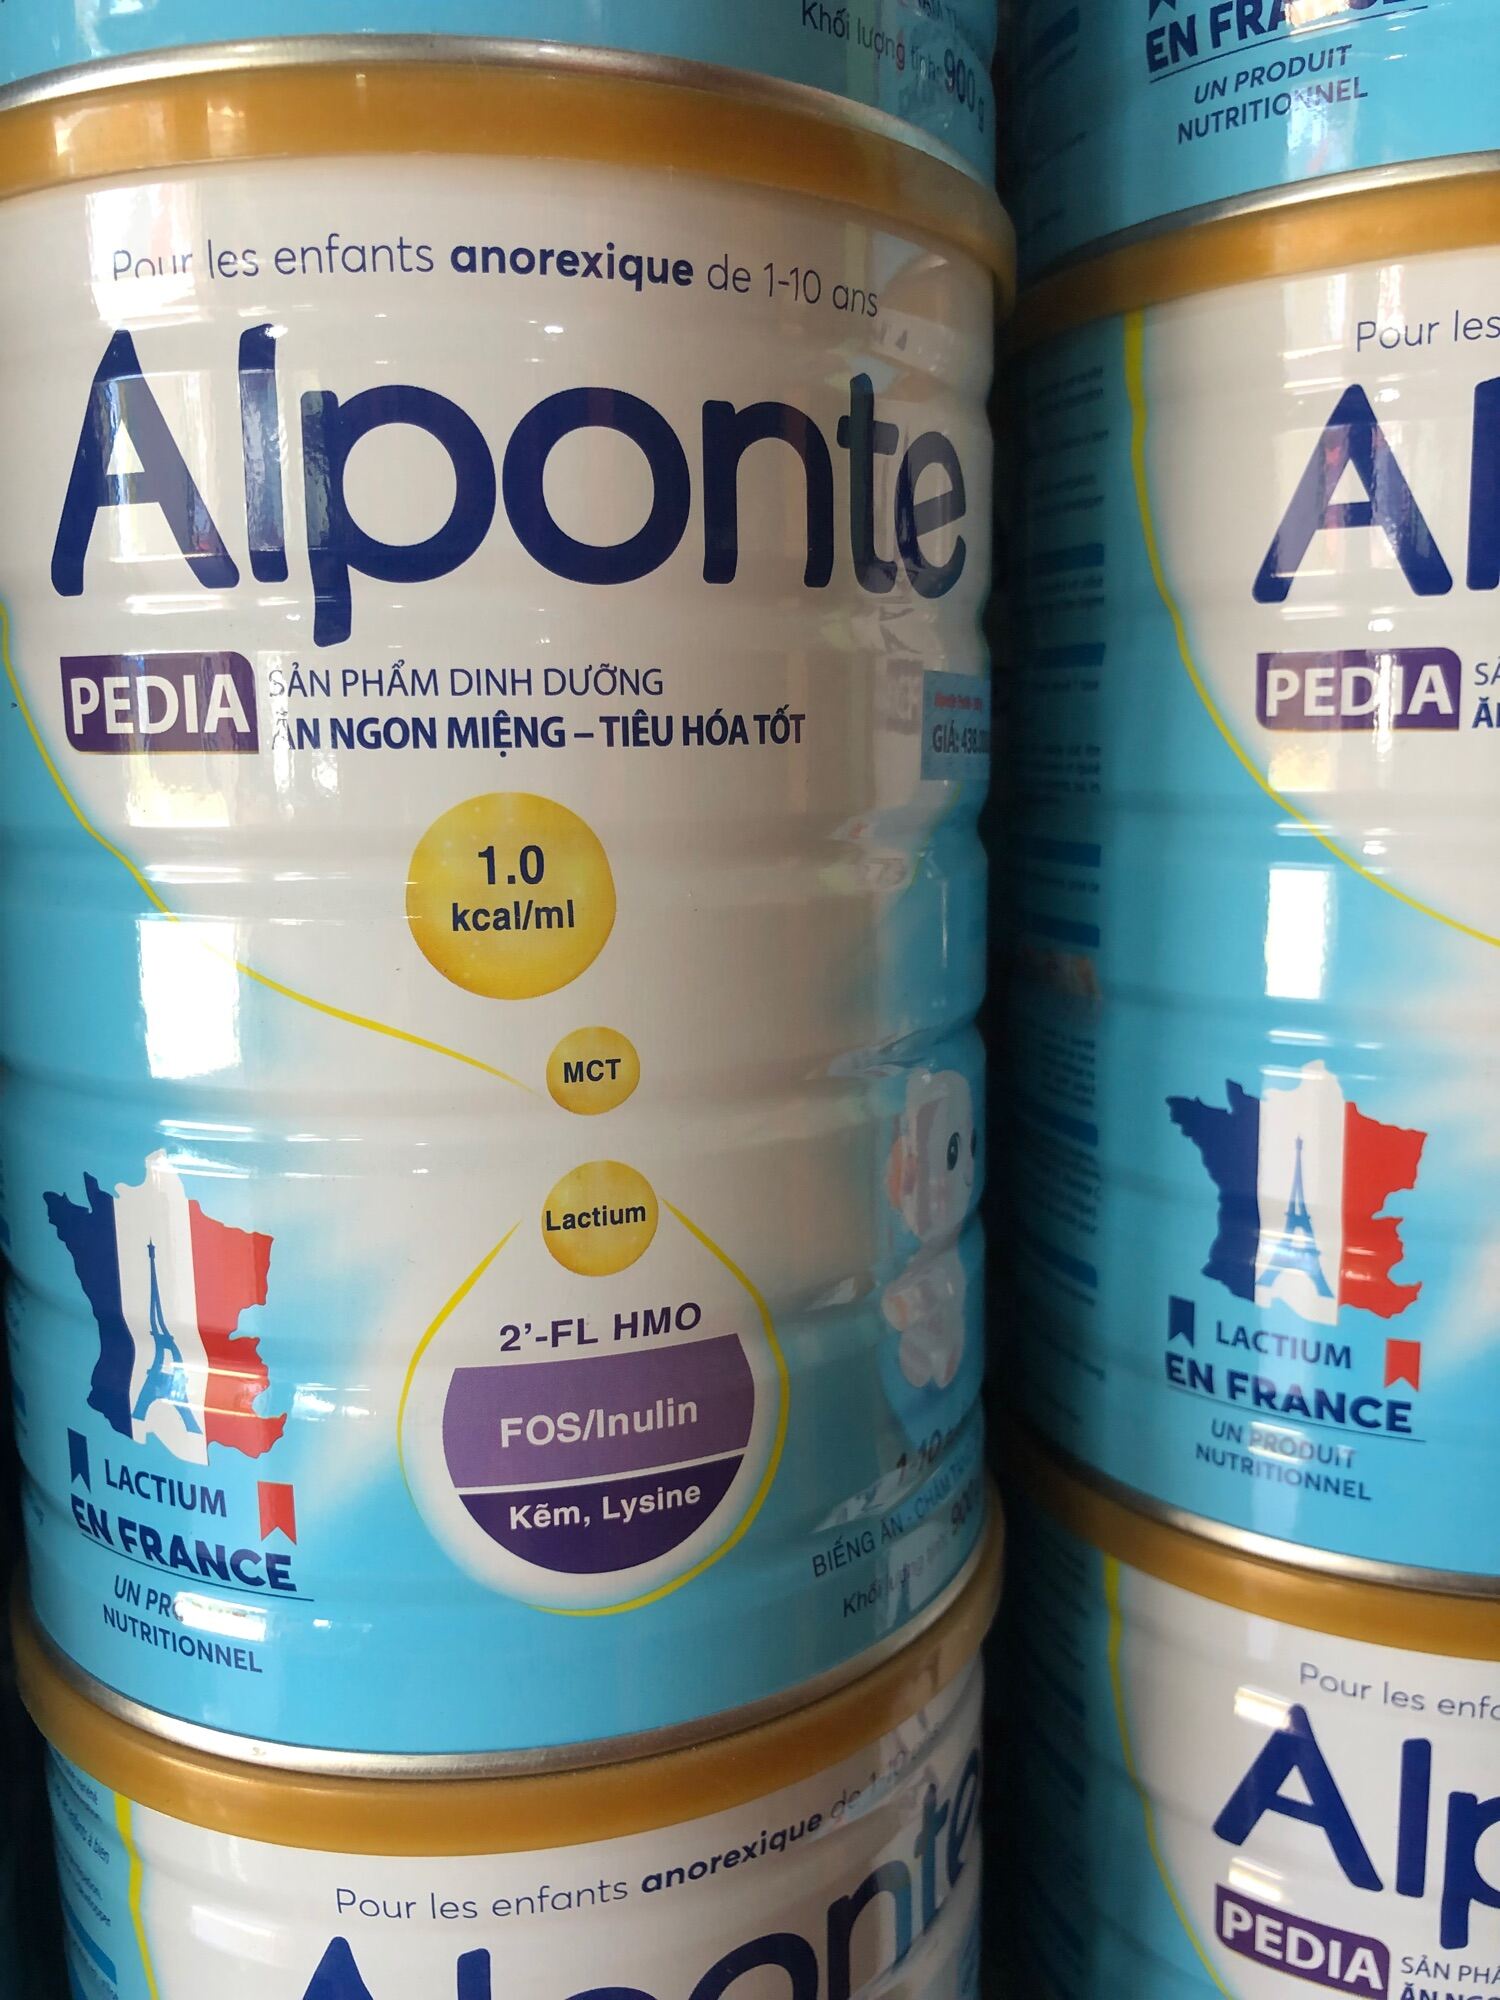 Sữa Alponte pedia 900g